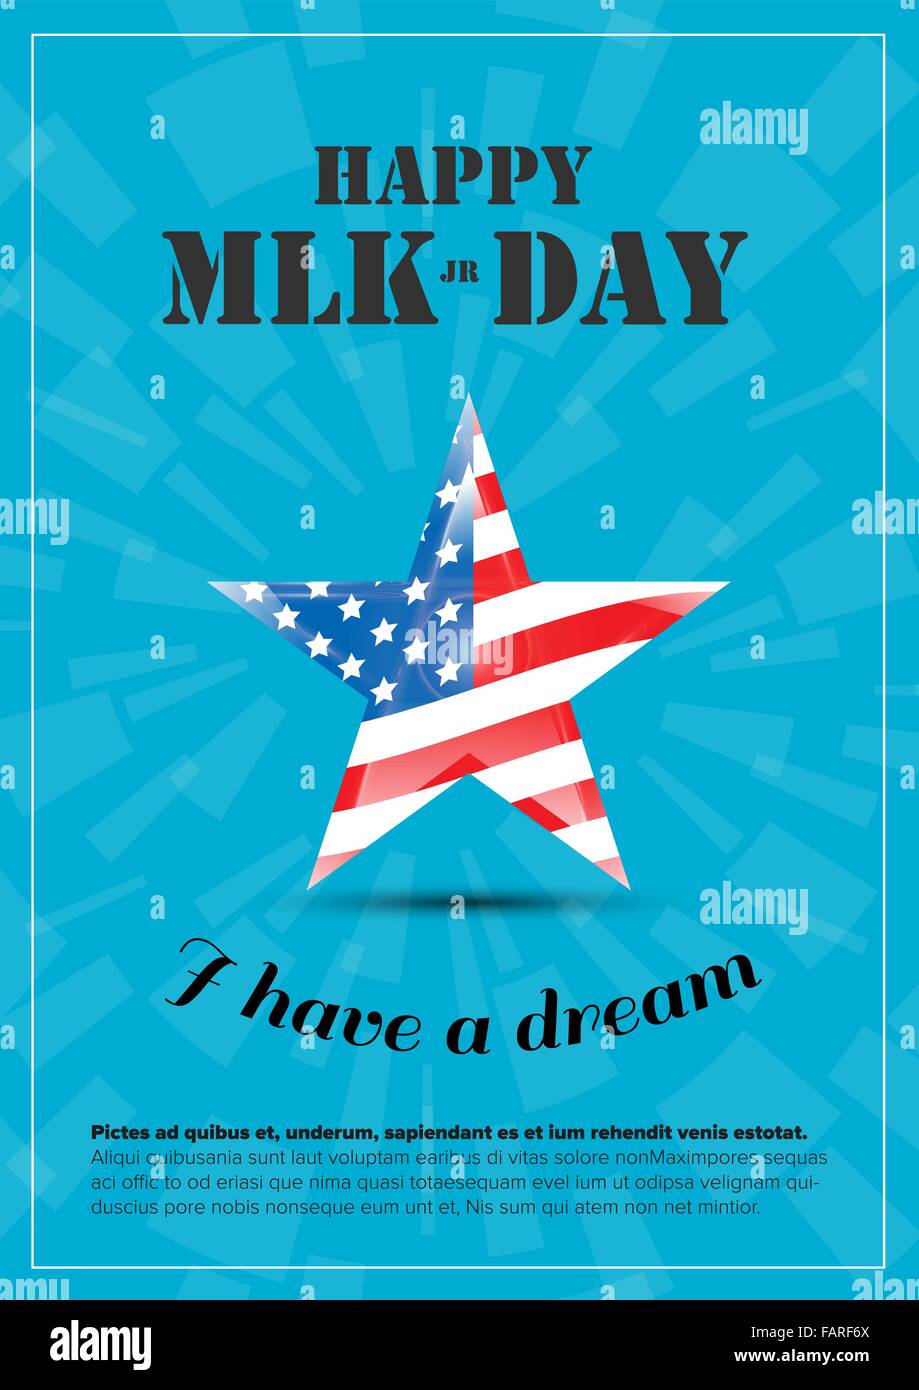 Vektor glücklich Martin Luther King Day Poster mit Usa Flagge